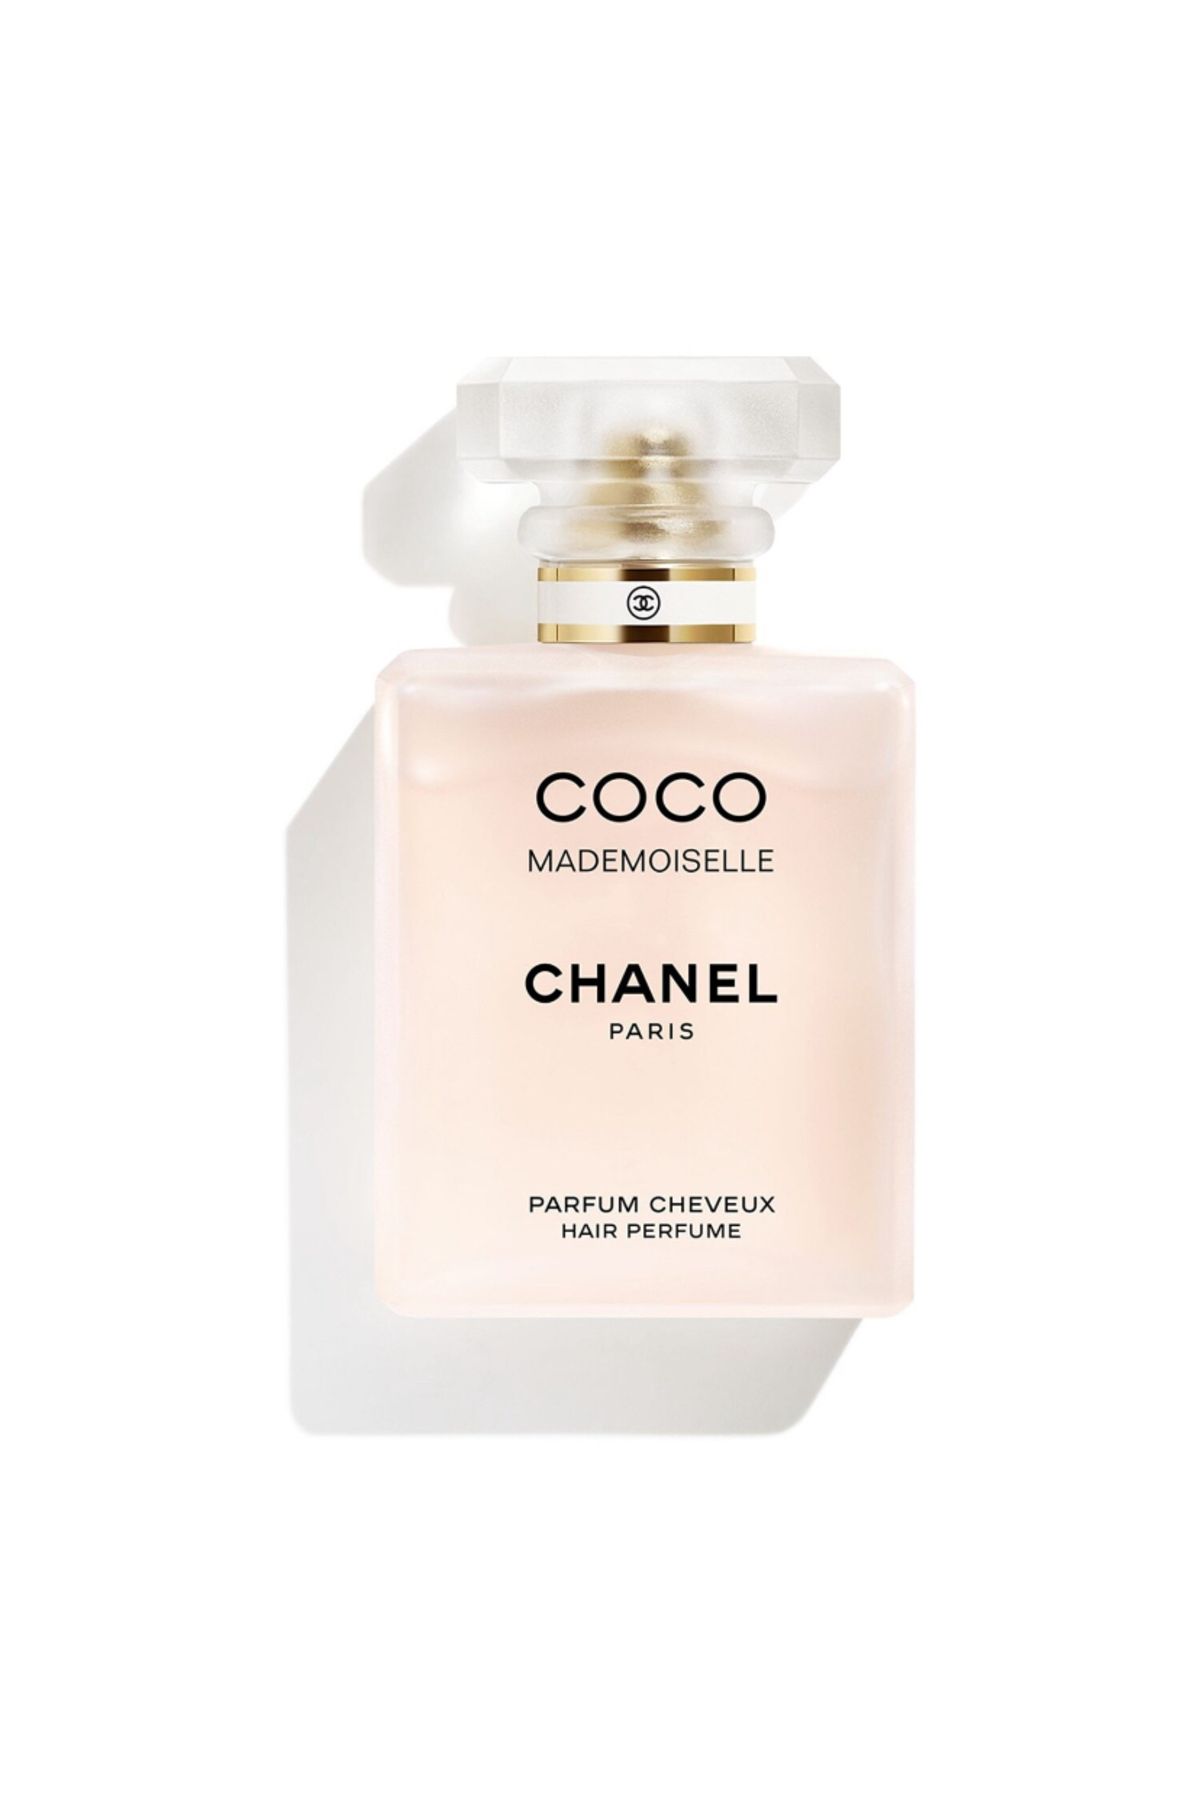 Chanel Coco Mademoıselle Saç Parfümü 35ml